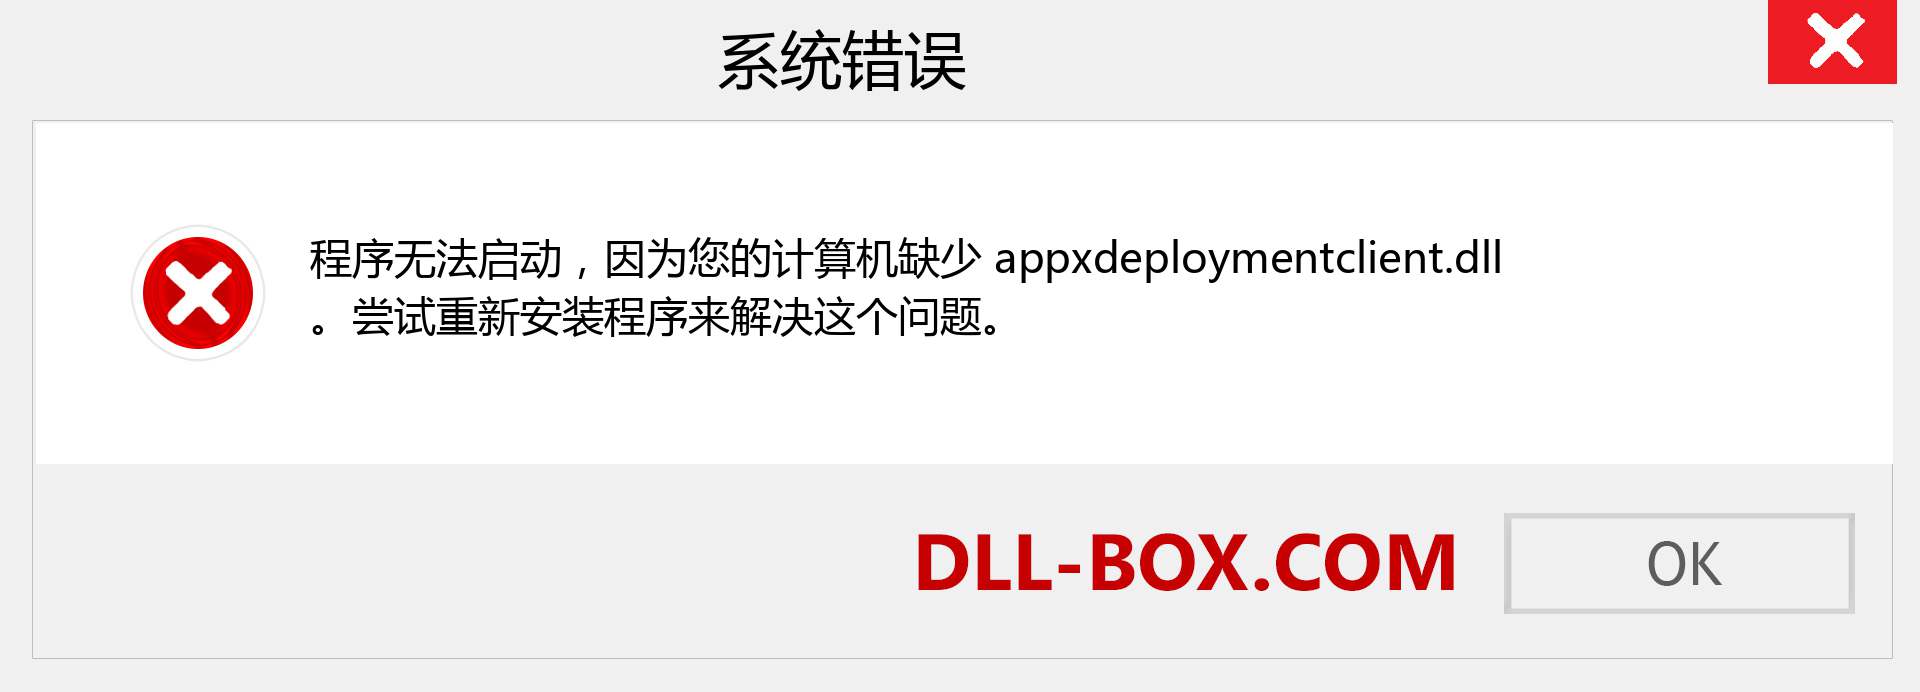 appxdeploymentclient.dll 文件丢失？。 适用于 Windows 7、8、10 的下载 - 修复 Windows、照片、图像上的 appxdeploymentclient dll 丢失错误